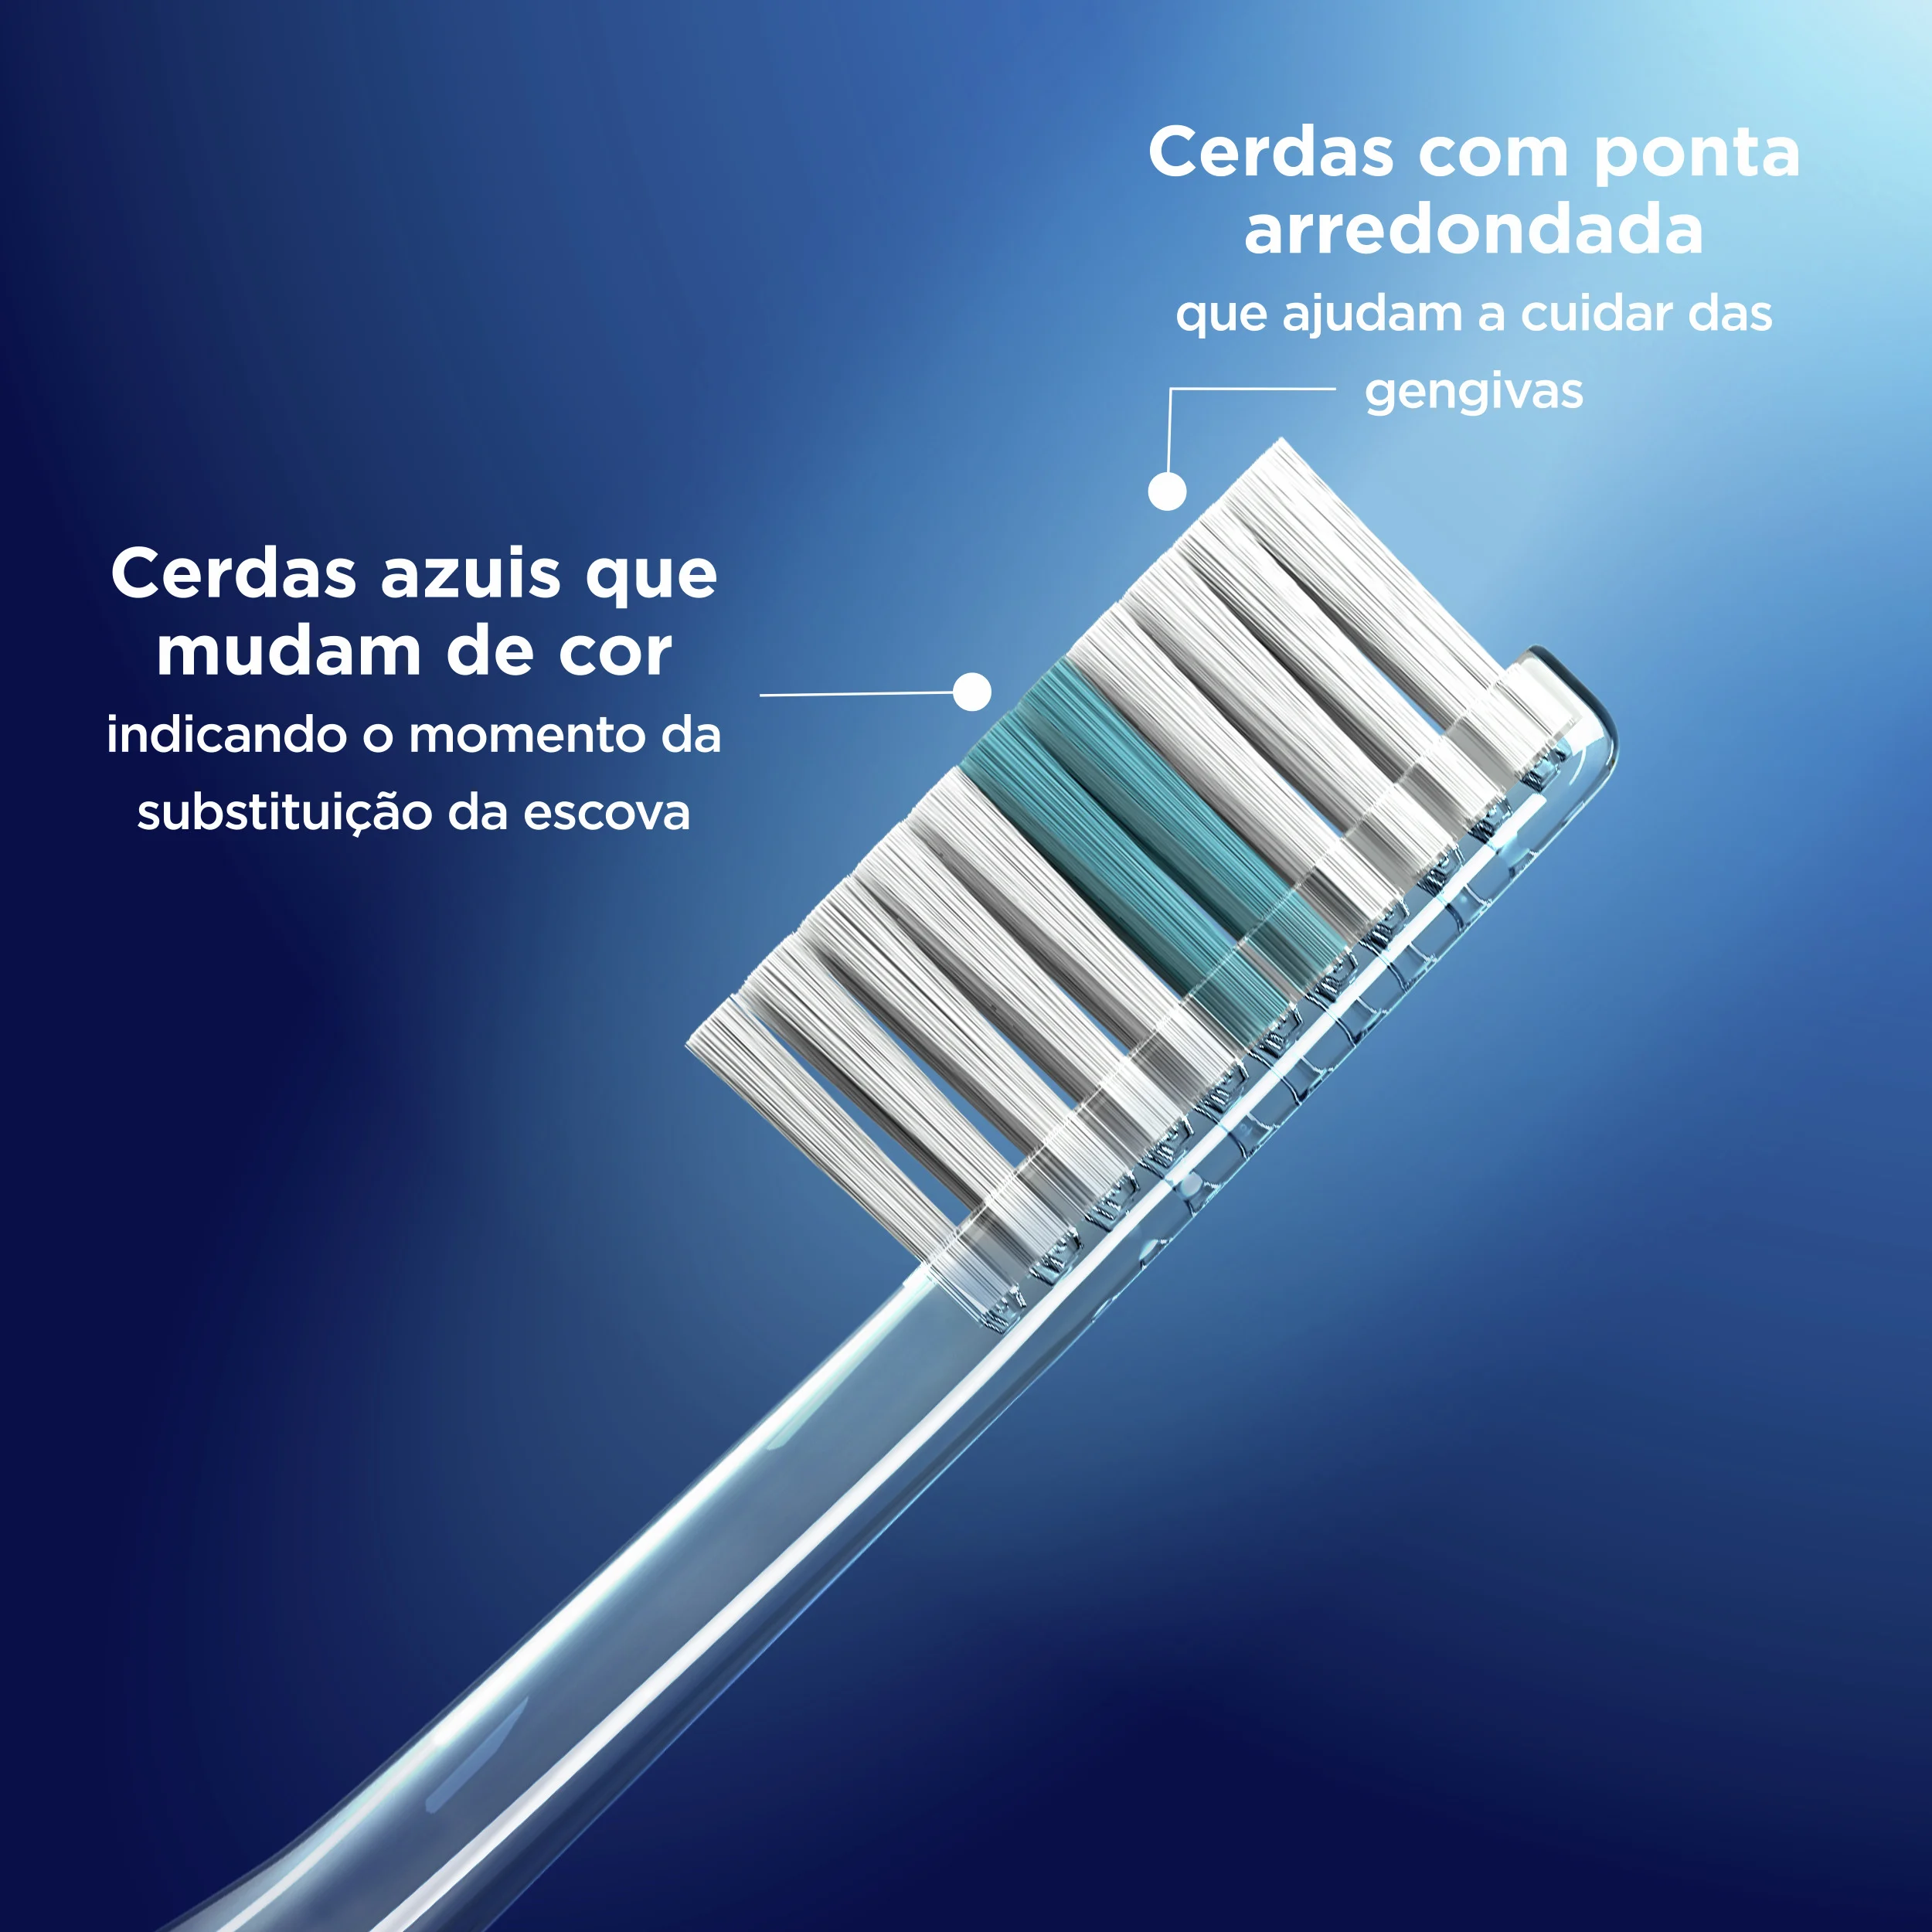 Cepillo Dental Oral-B Indicator Colors Pack Familiar